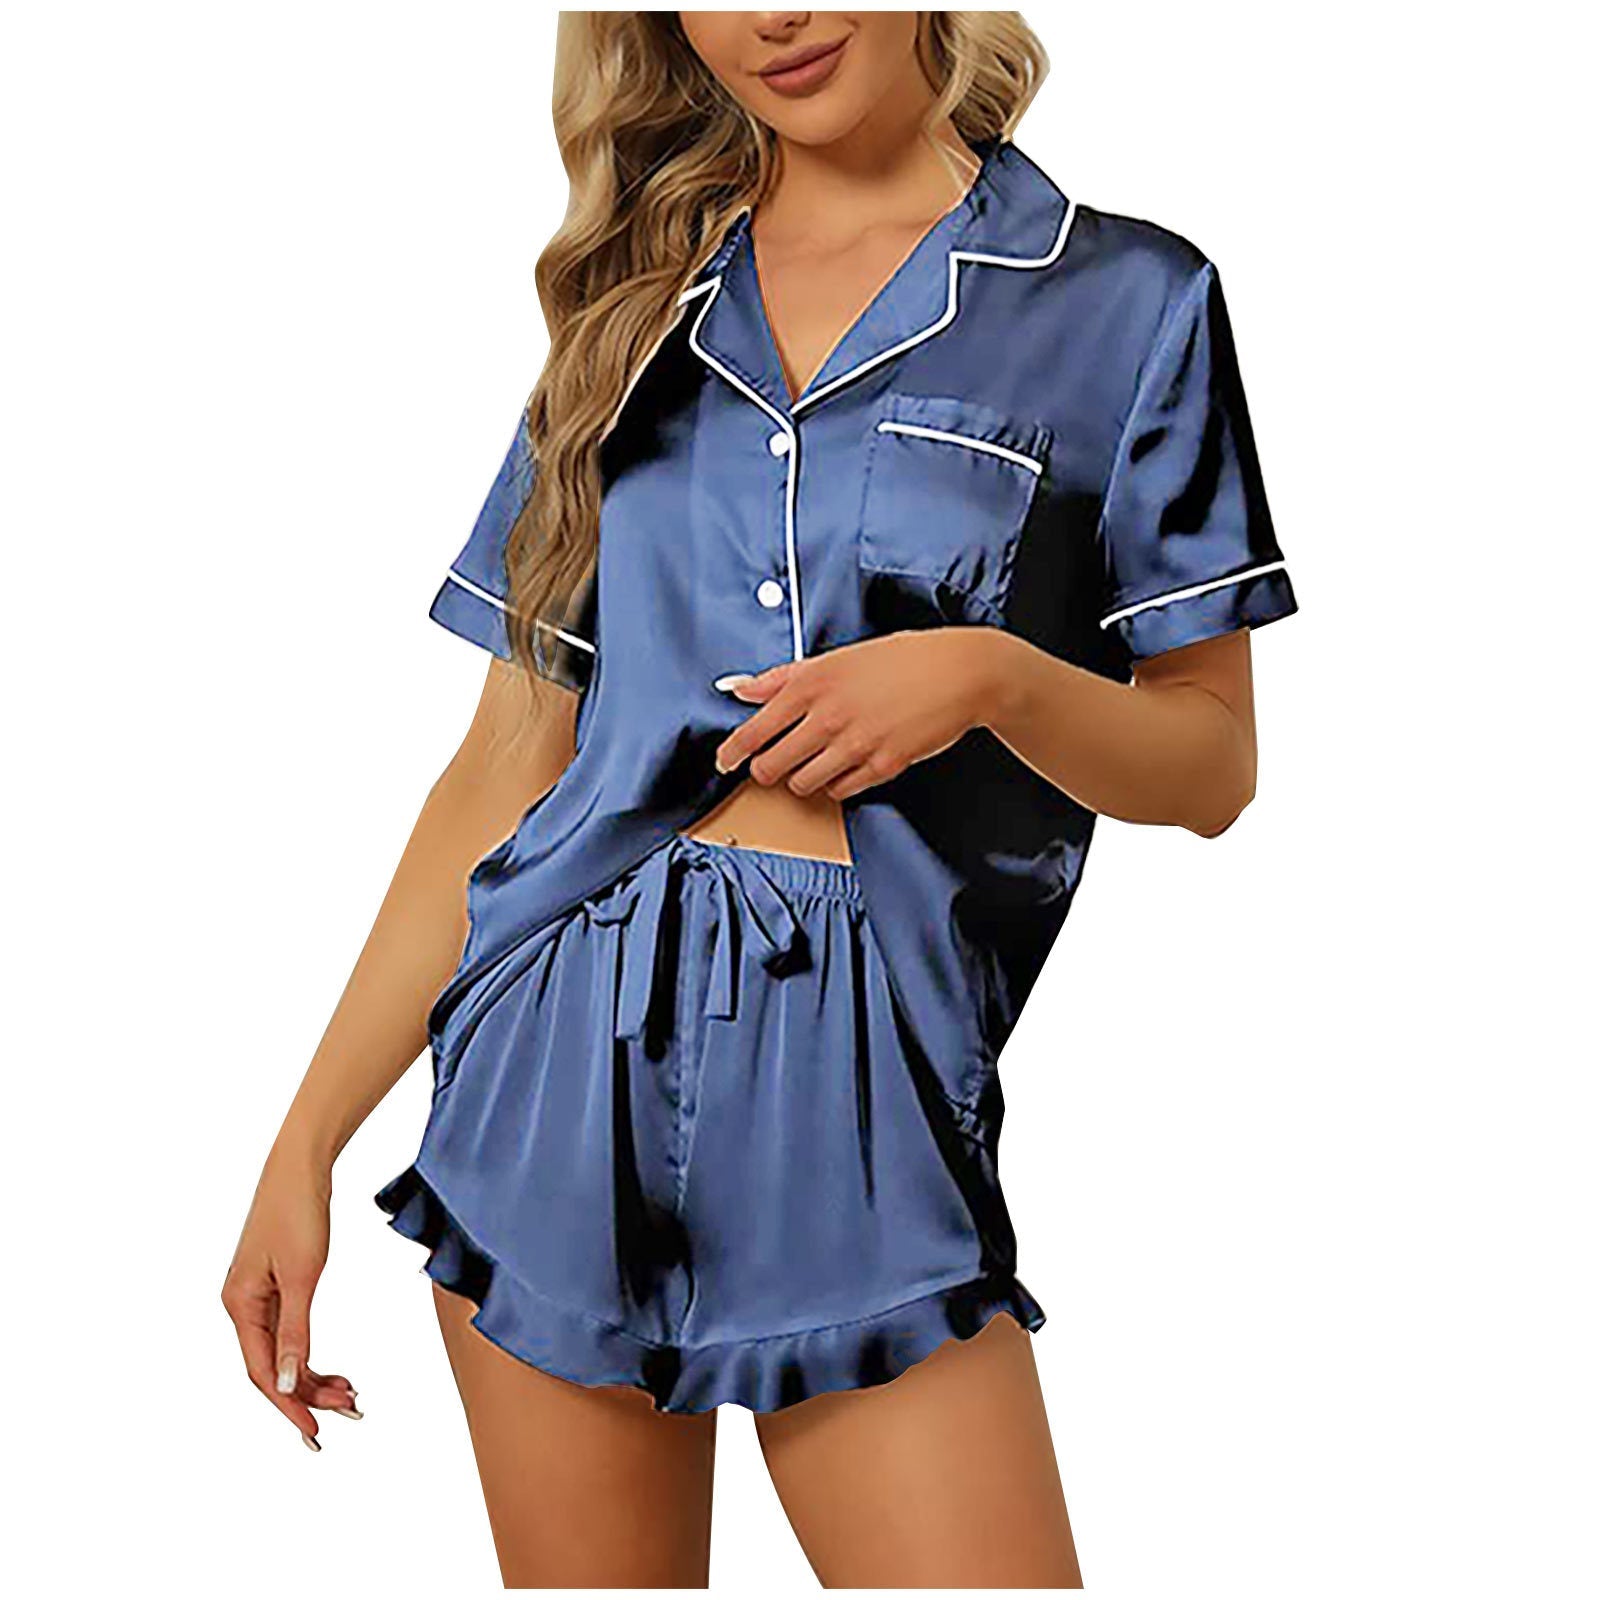 Casual Satin Summer Pajamas Suits for Women-Pajamas-Navy Blue-S-Free Shipping Leatheretro